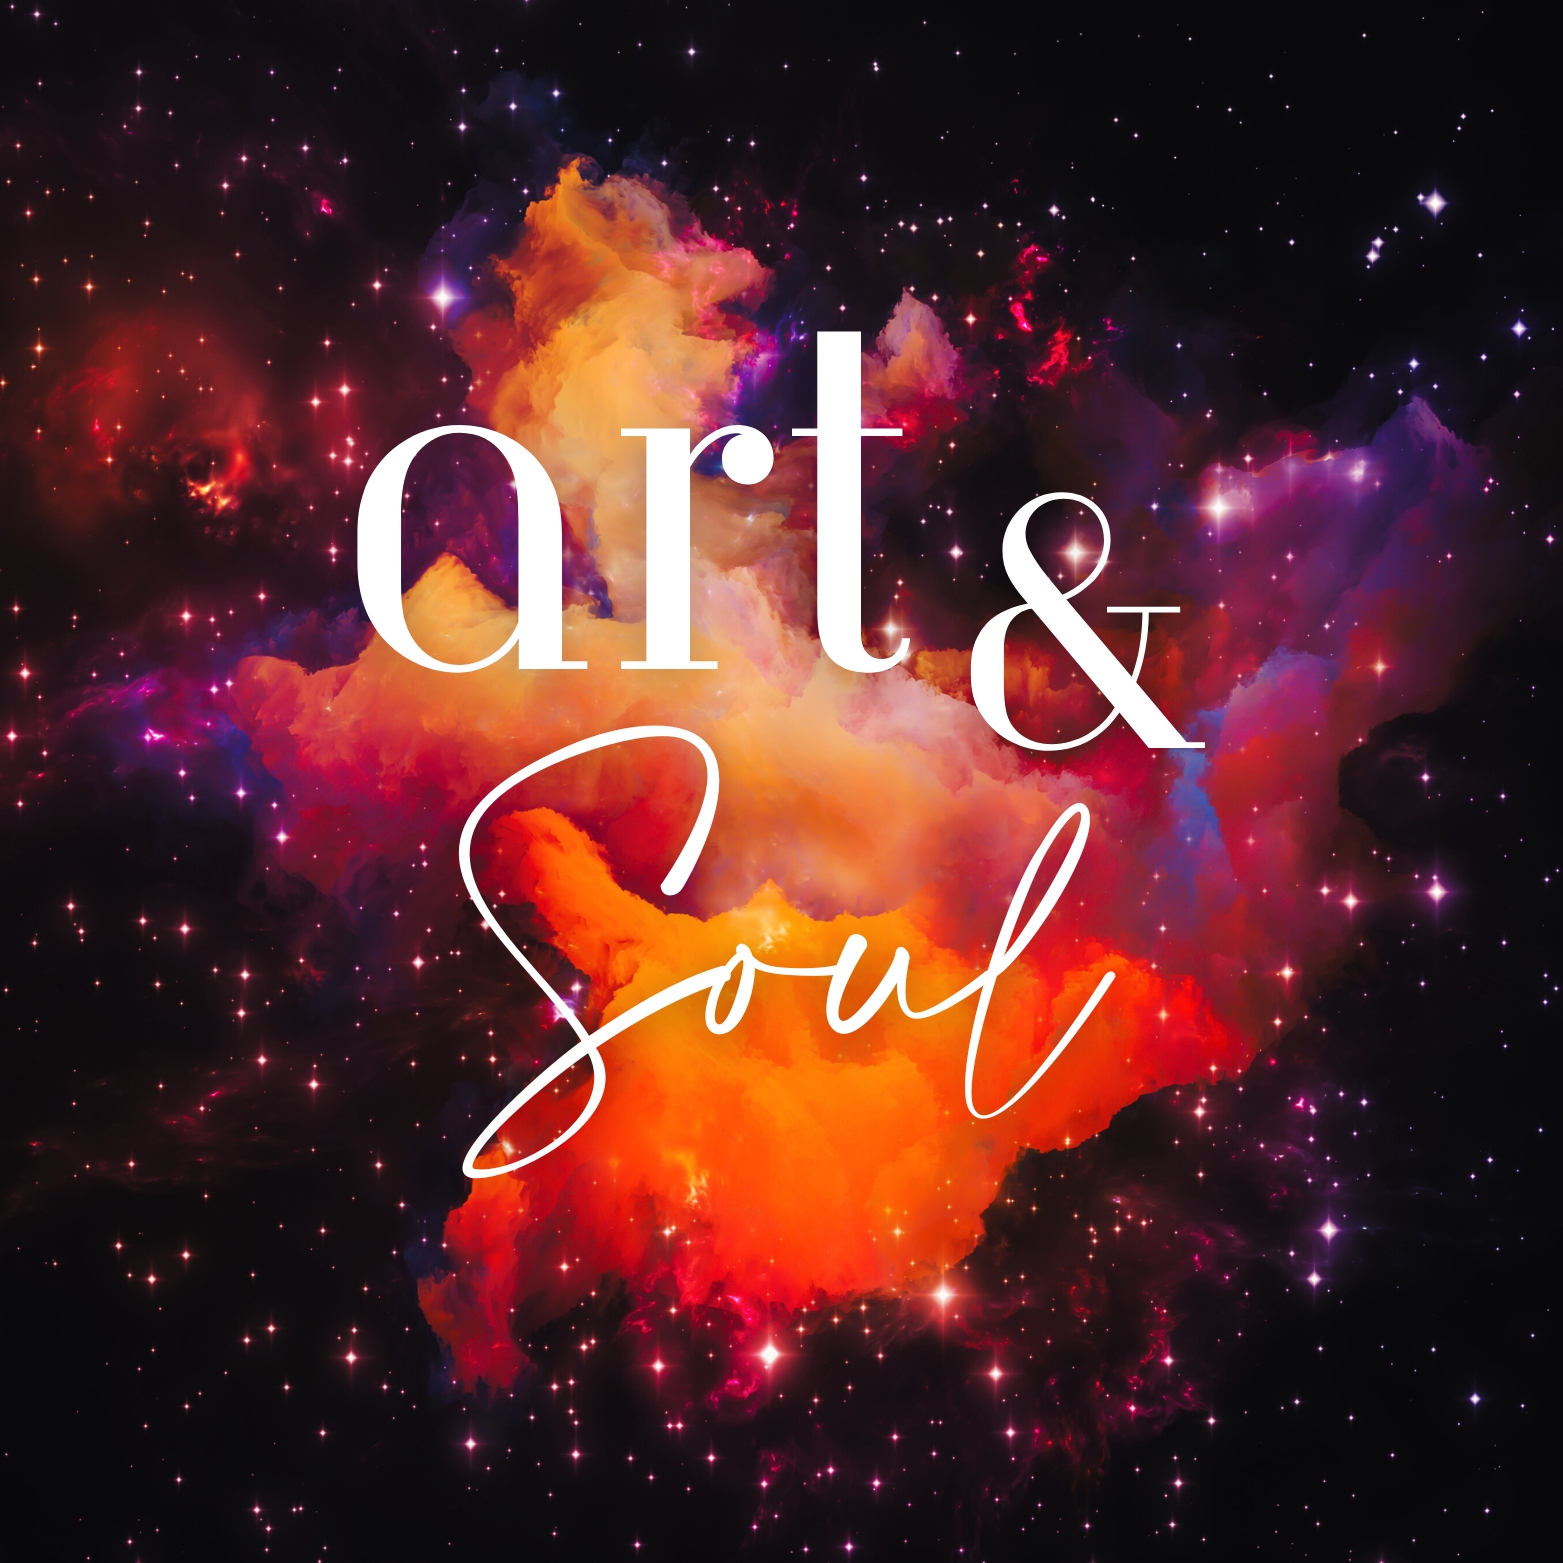 Art & Soul